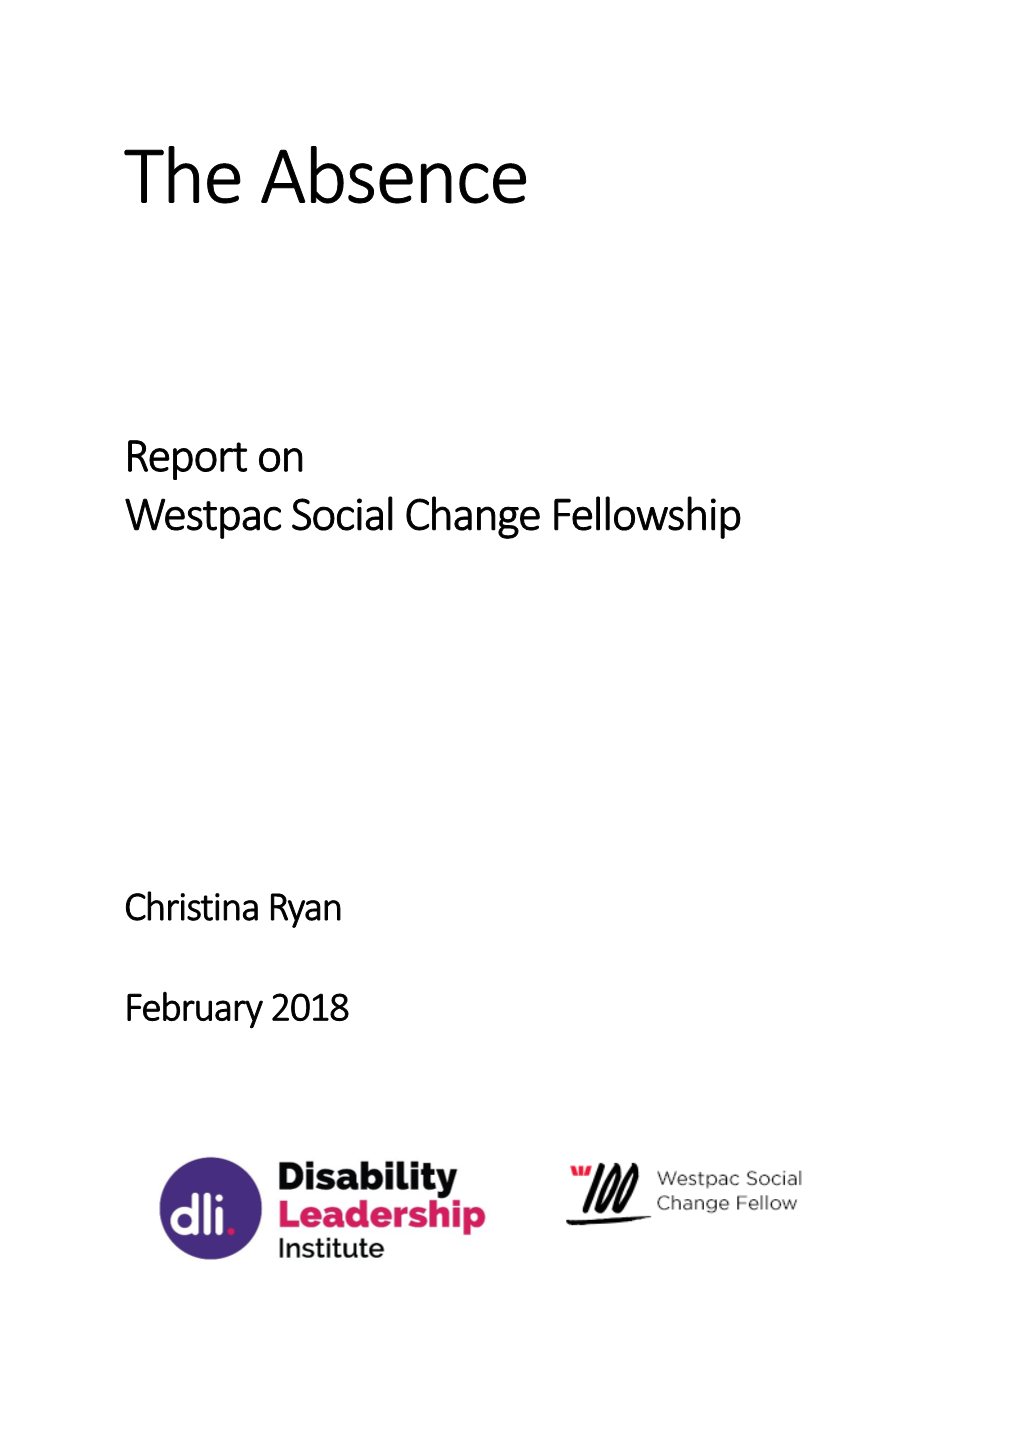 Westpac Social Change Fellowship